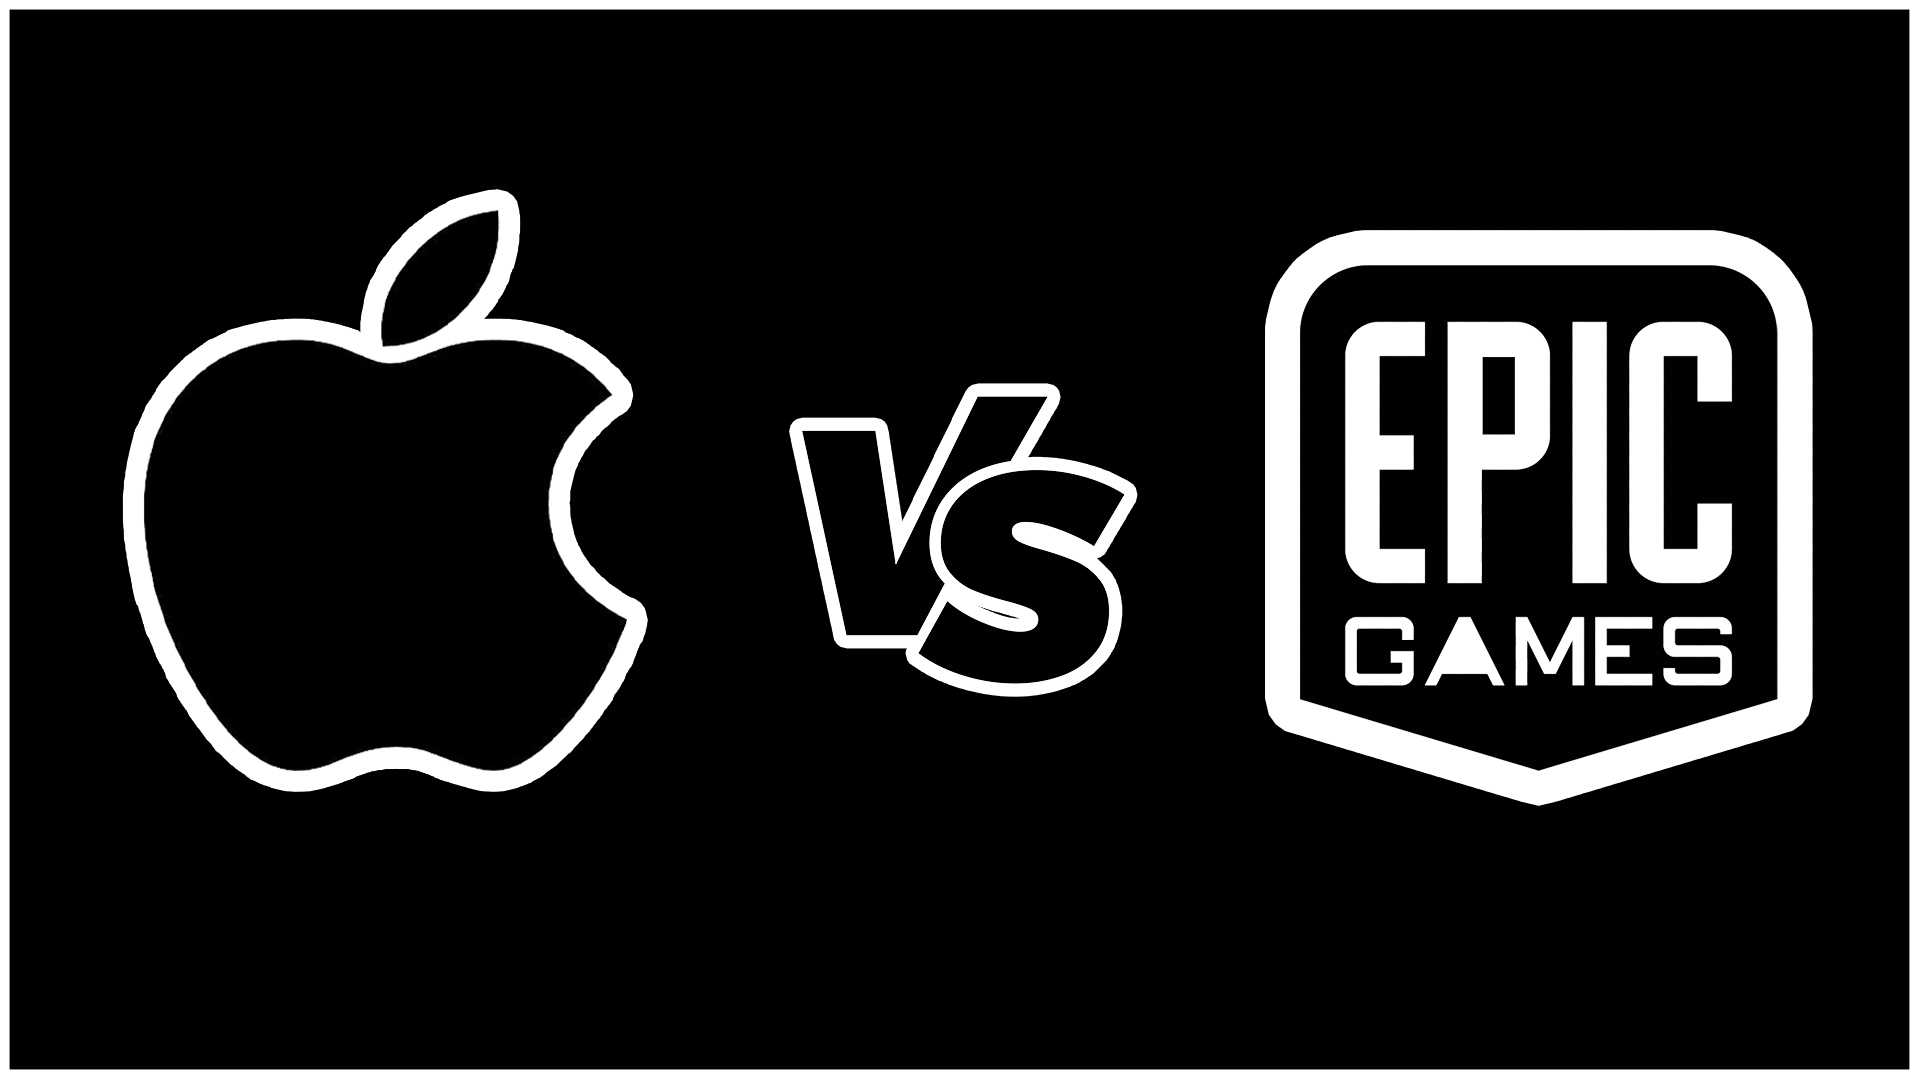 Apple Inc. vs Epic Games, a longstanding match